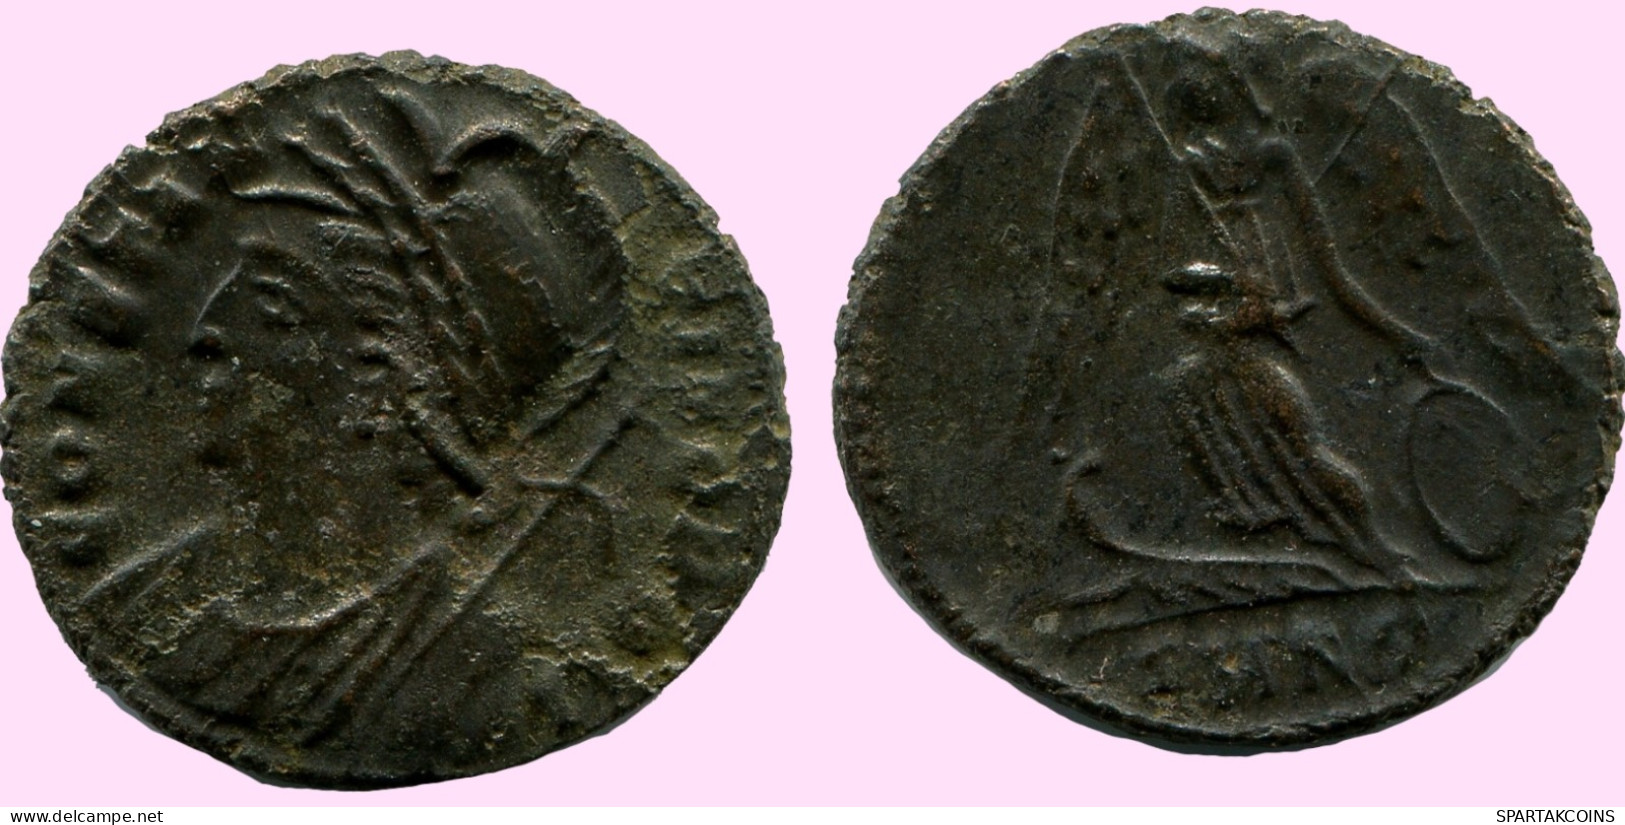 CONSTANTINUS I CONSTANTINOPOLI FOLLIS Ancient ROMAN Coin #ANC12083.25.U.A - The Christian Empire (307 AD Tot 363 AD)